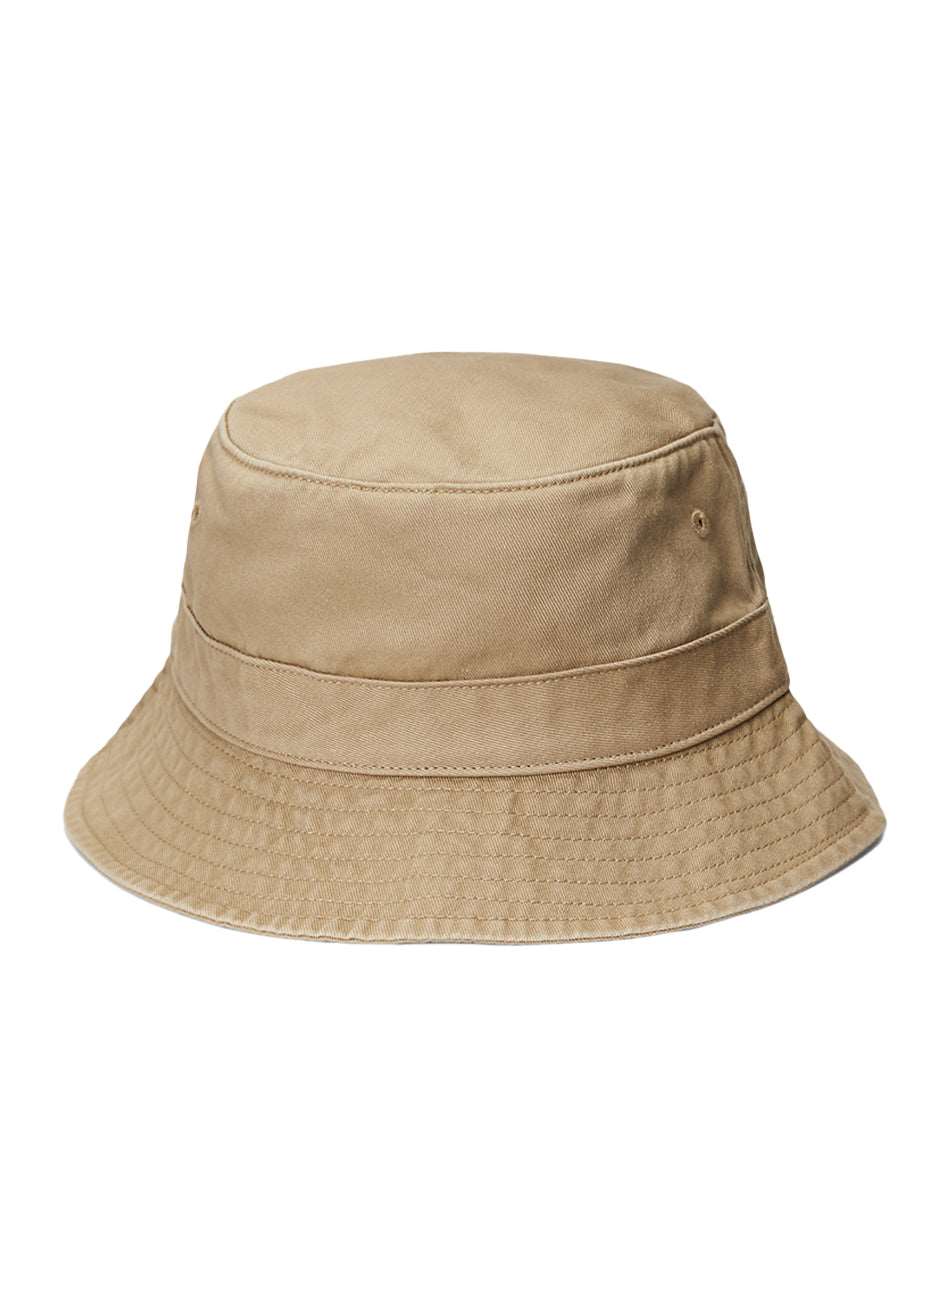 Loft Bucket Hat - Caf Tan